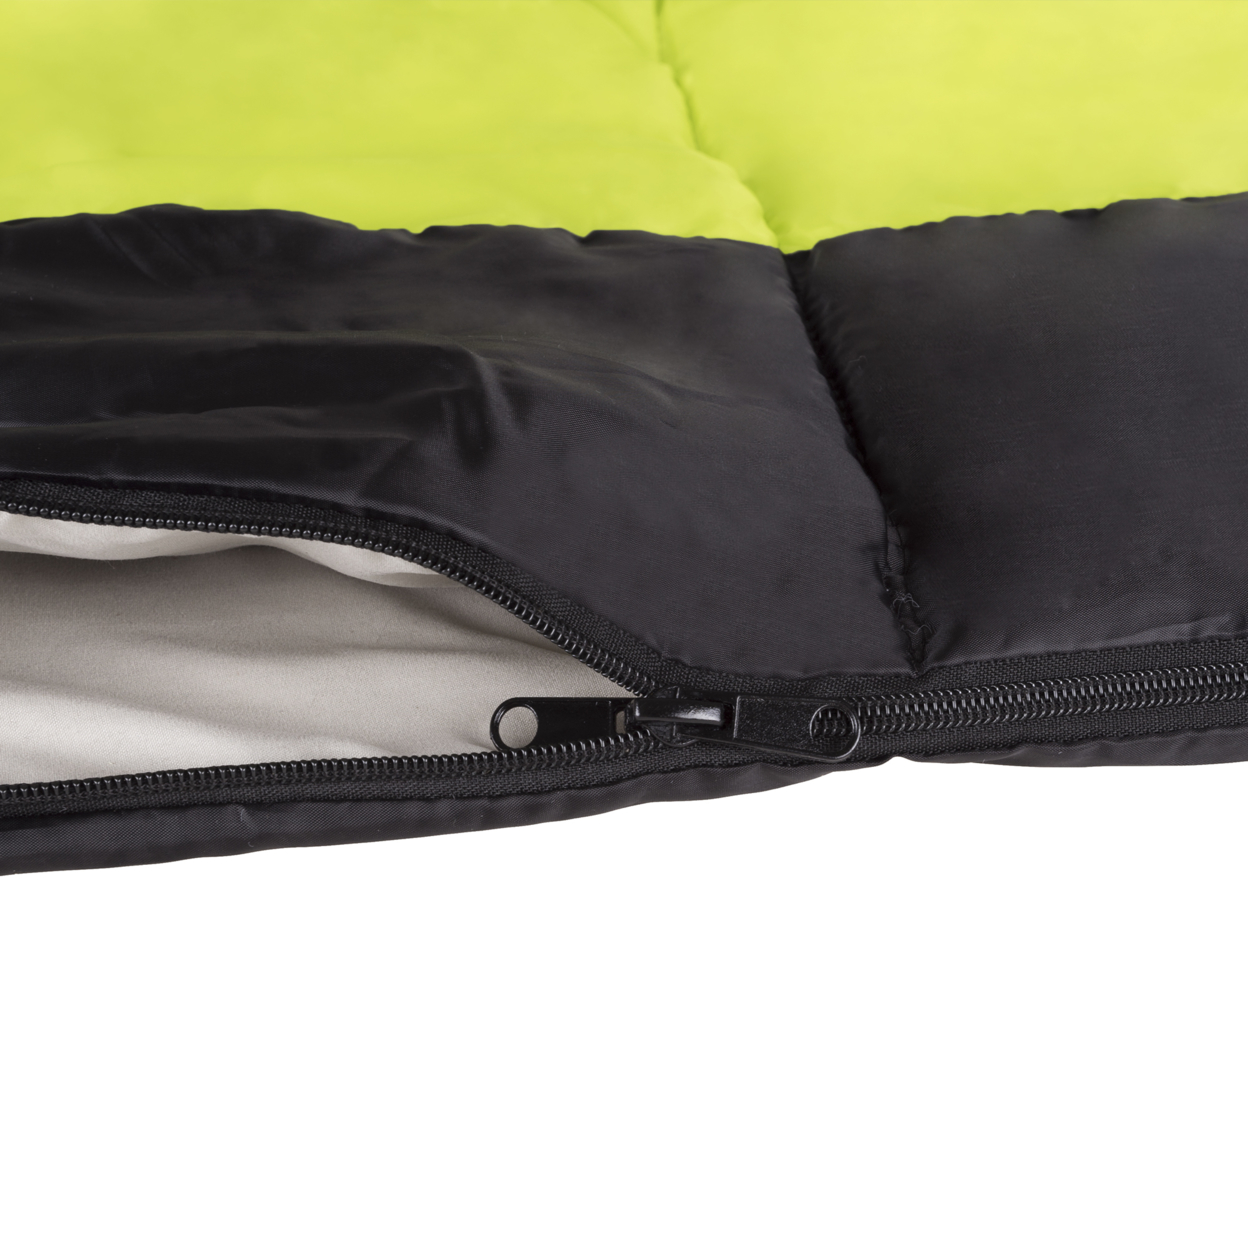 Sleeping Bag, 2-Season With Carrying Bag For Adults And Kids, Otter Tail Sleeping Bag